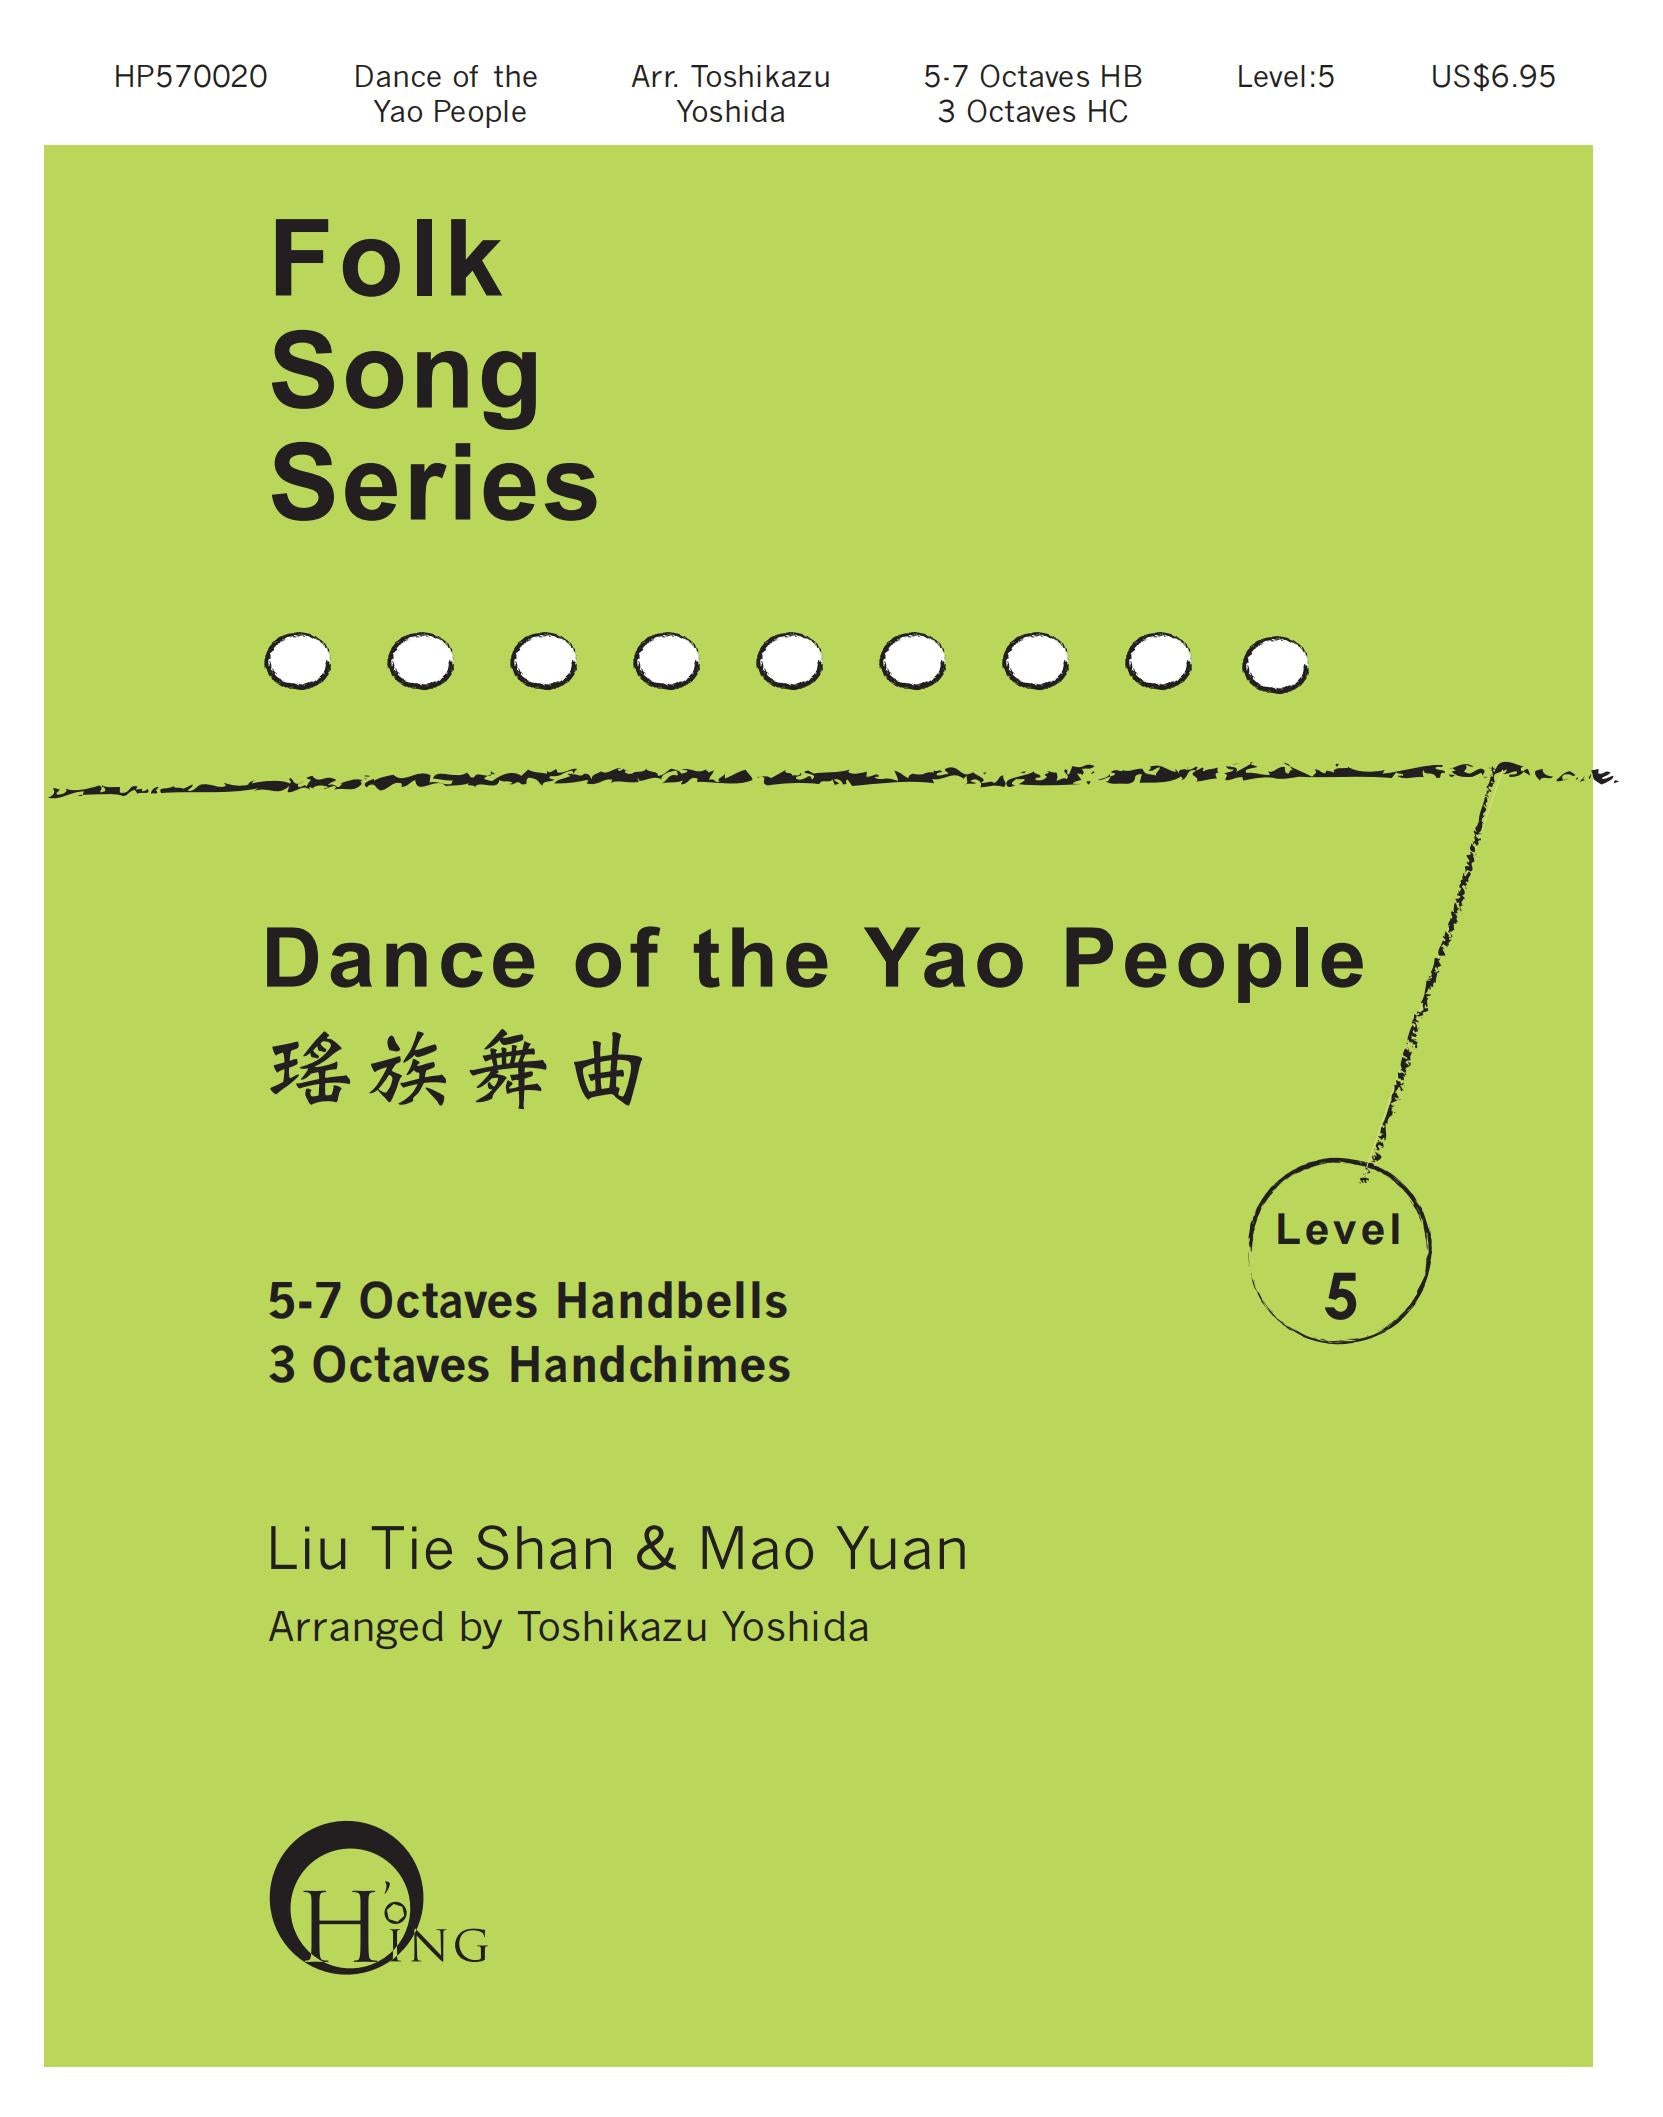 Dance of the Yao People (瑤族舞曲)